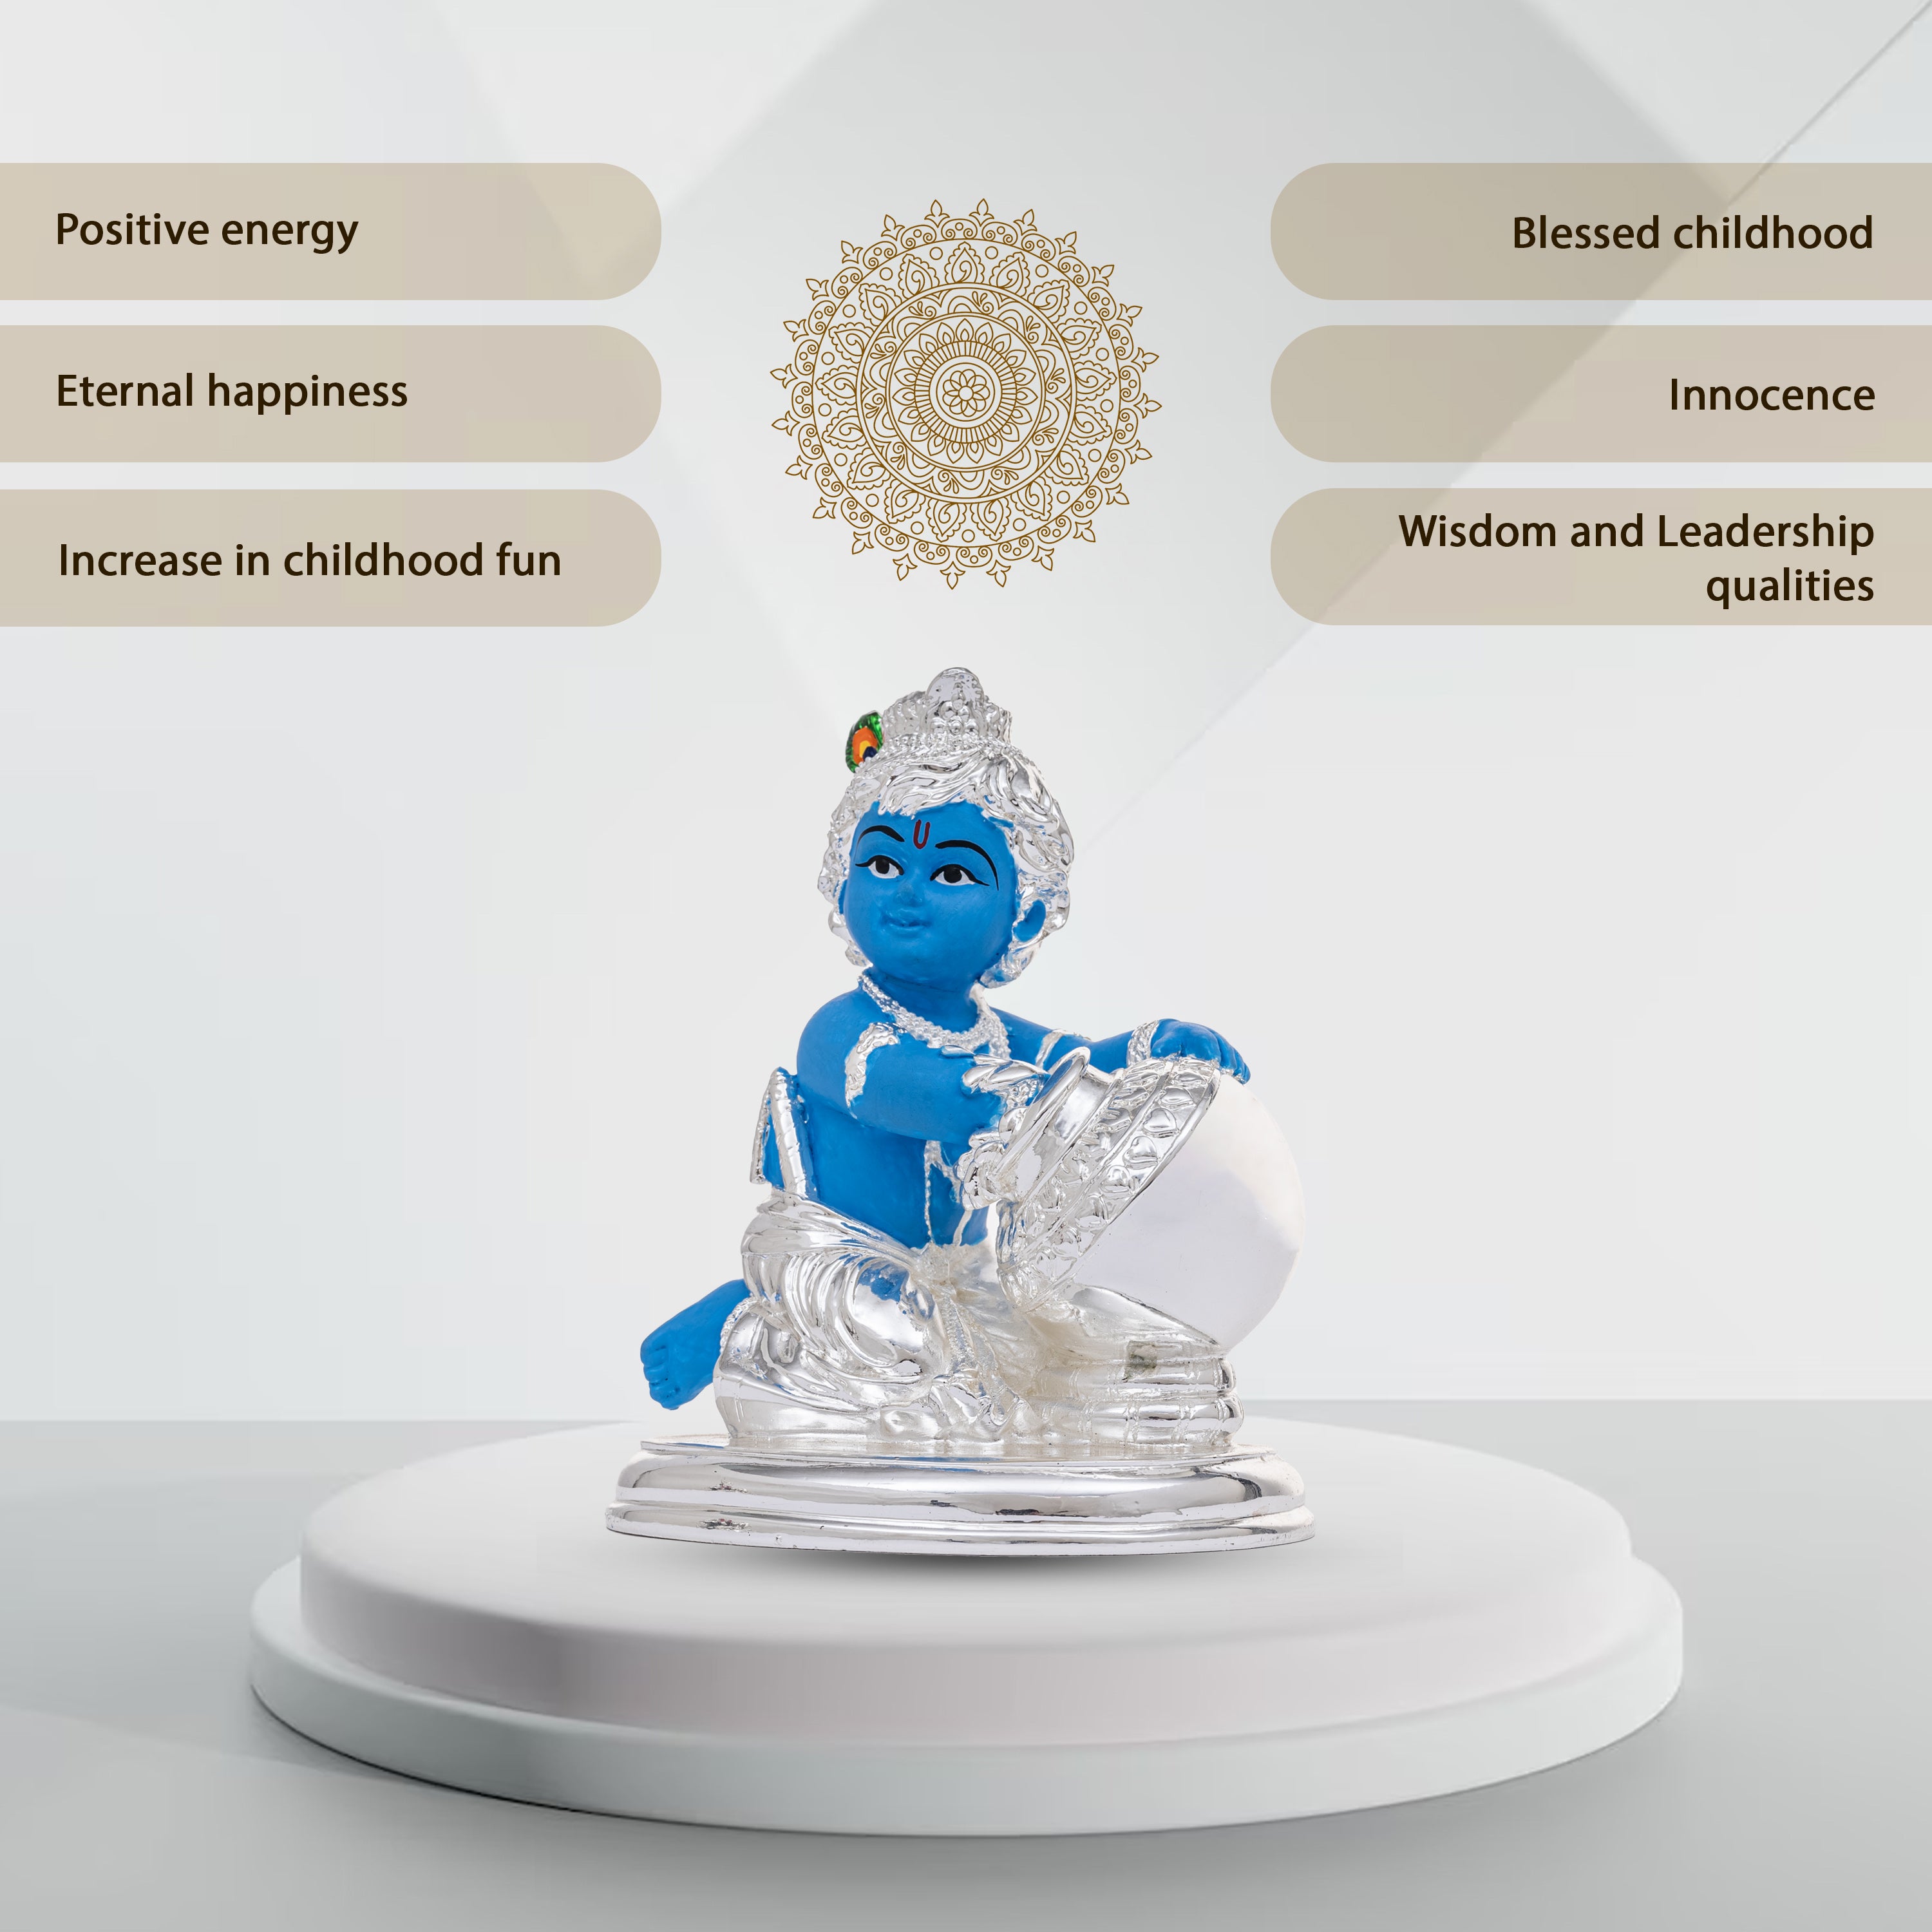 Original Silver Coated Blue Krishna Idol